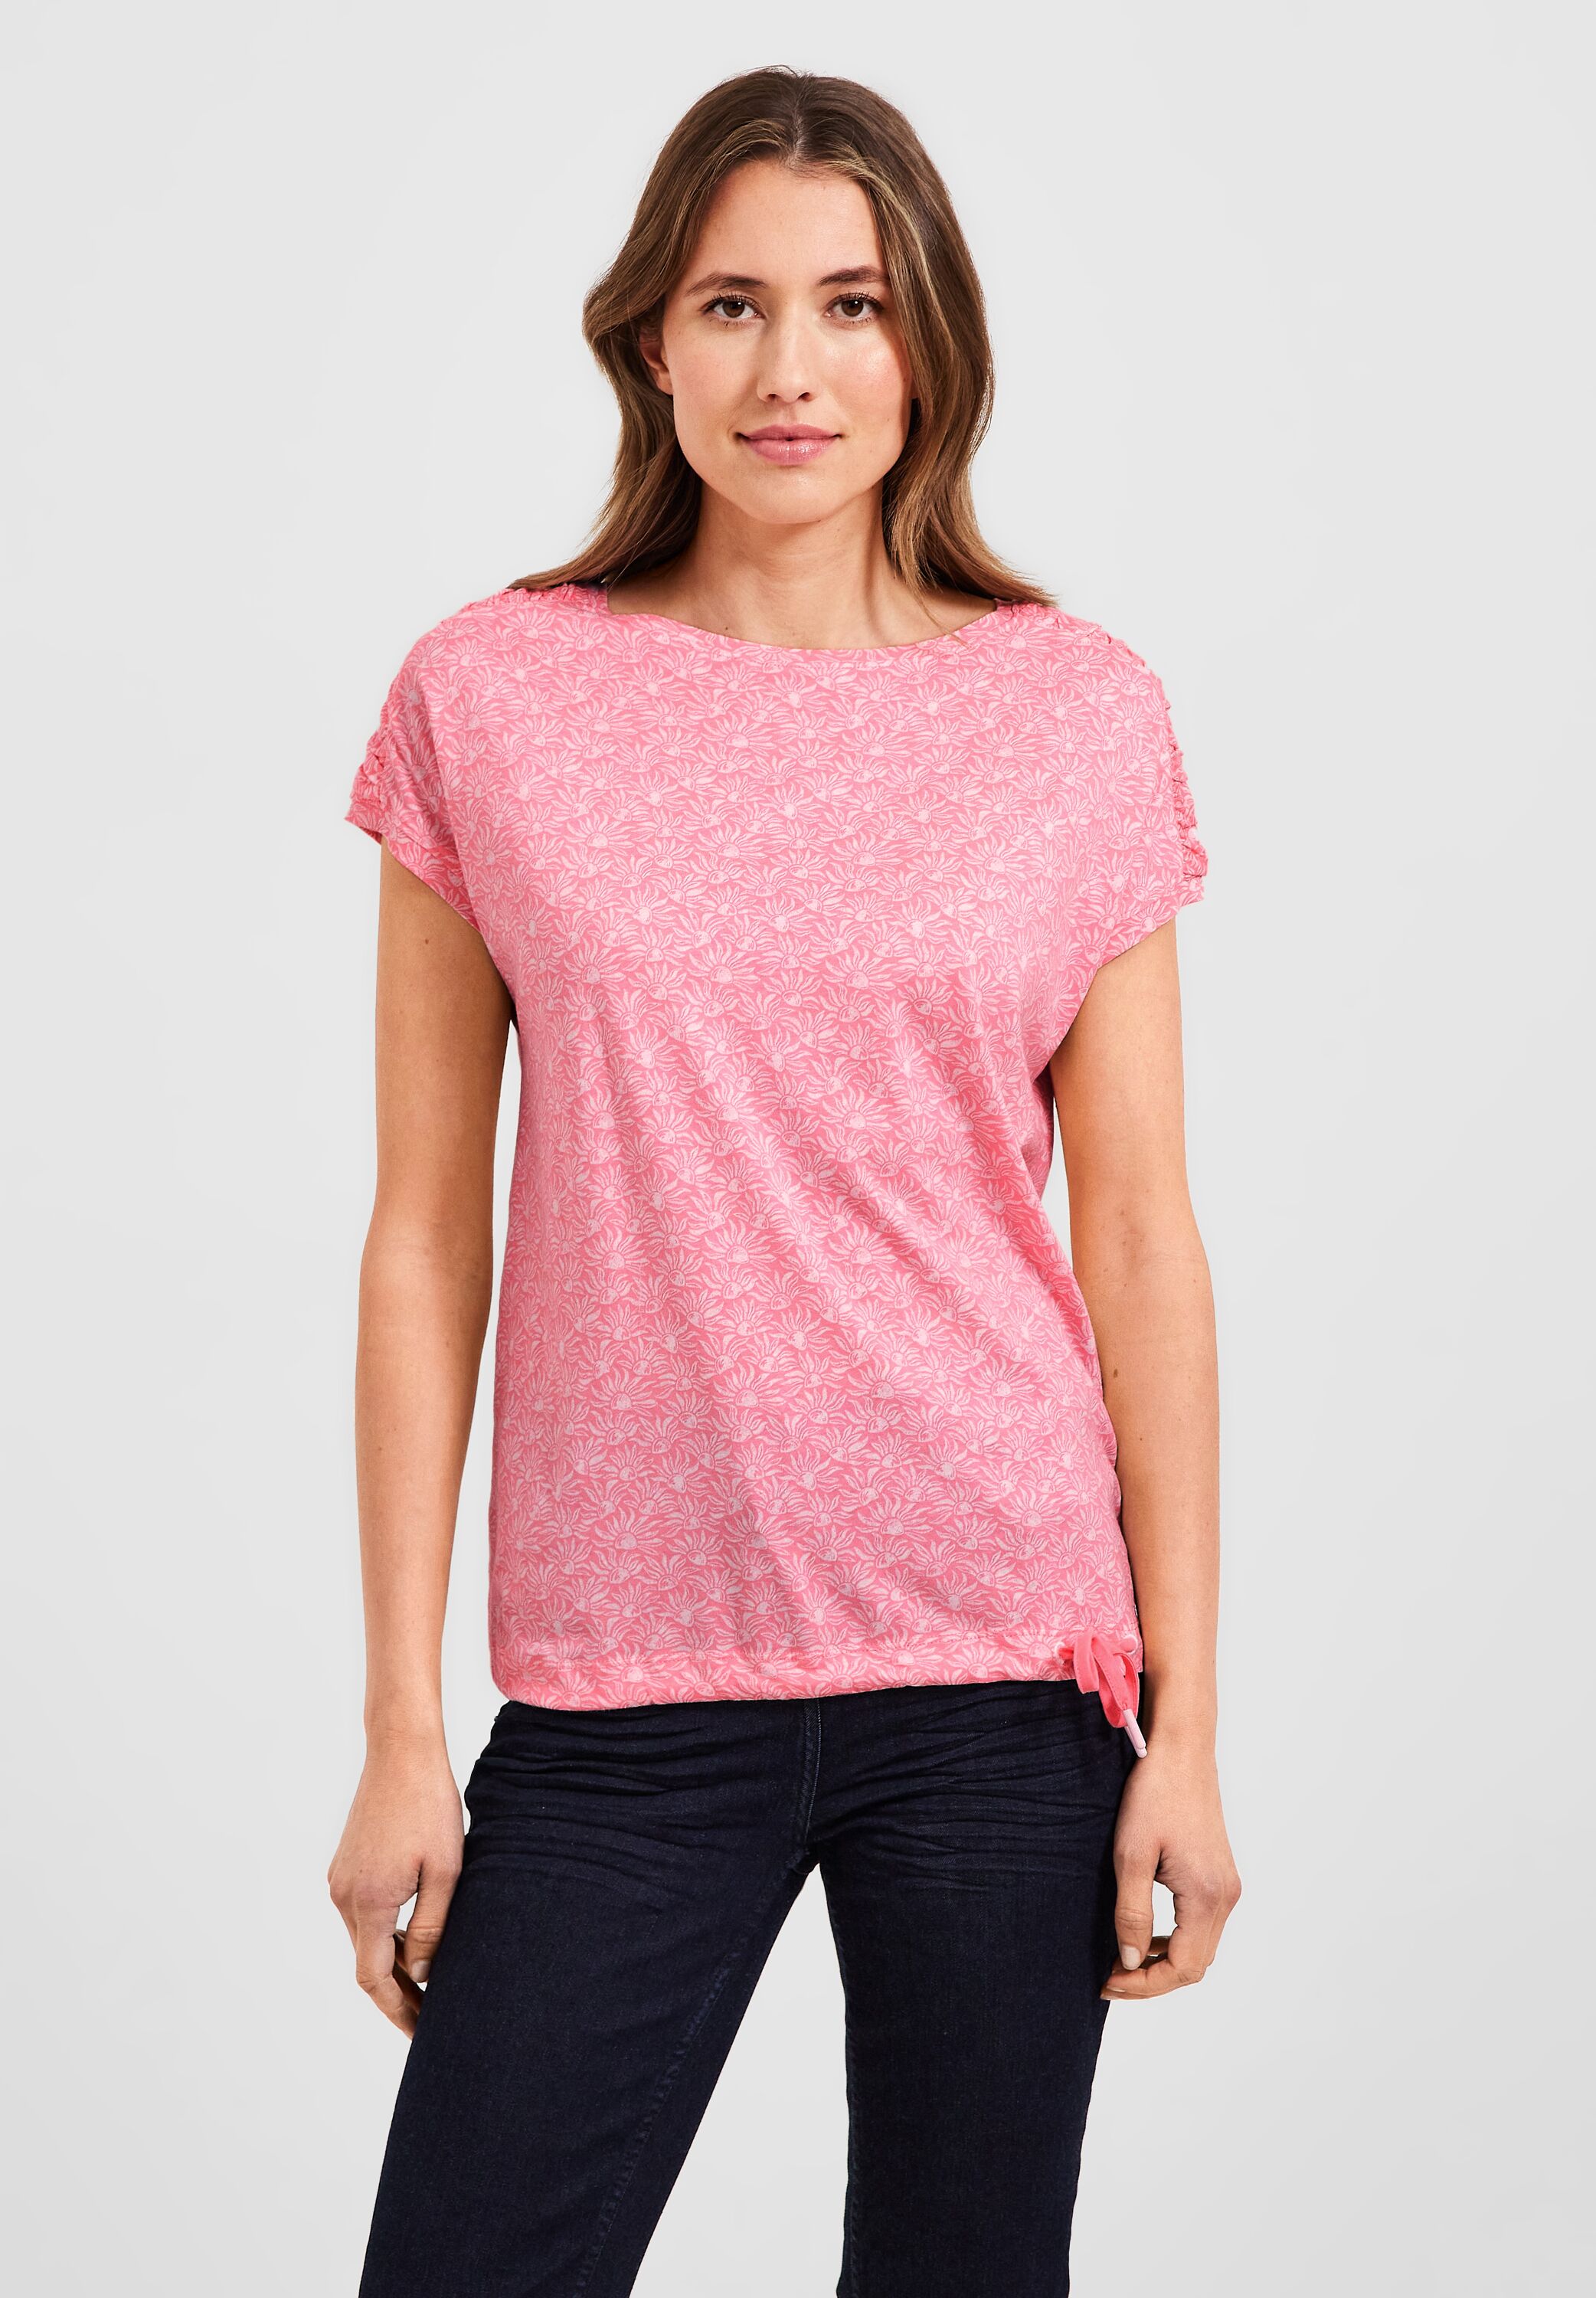 CECIL T-Shirt in Soft Pink im SALE reduziert B320030-25030 - CONCEPT Mode